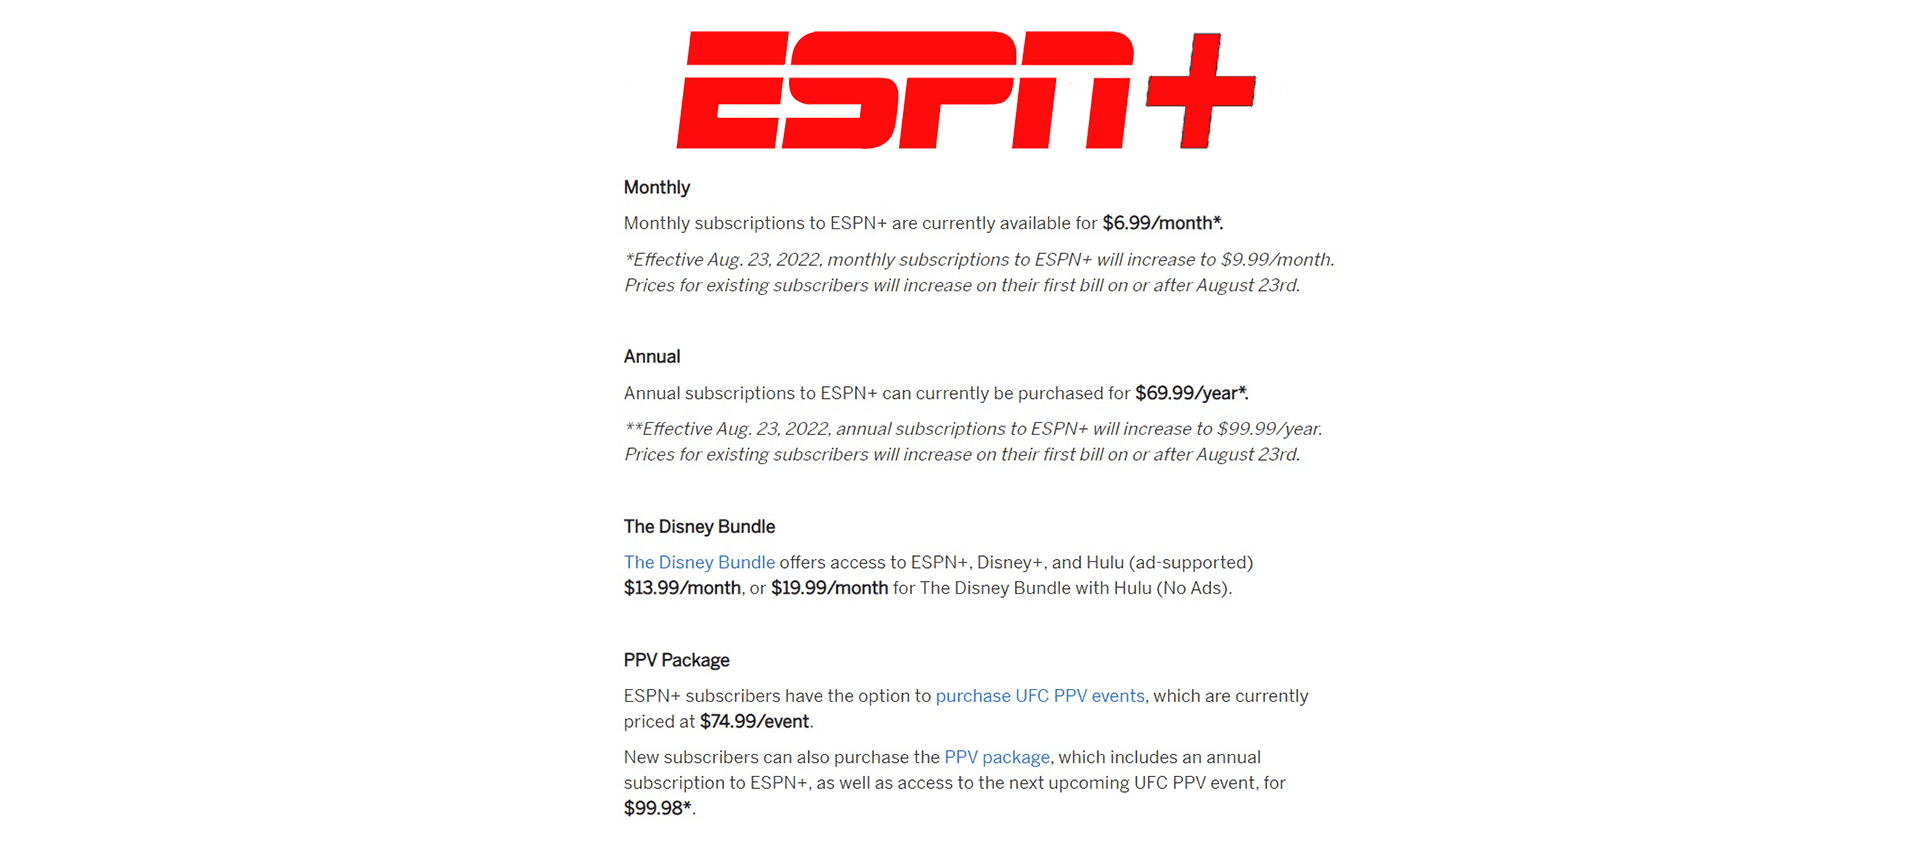 ESPN Plus plans and prices